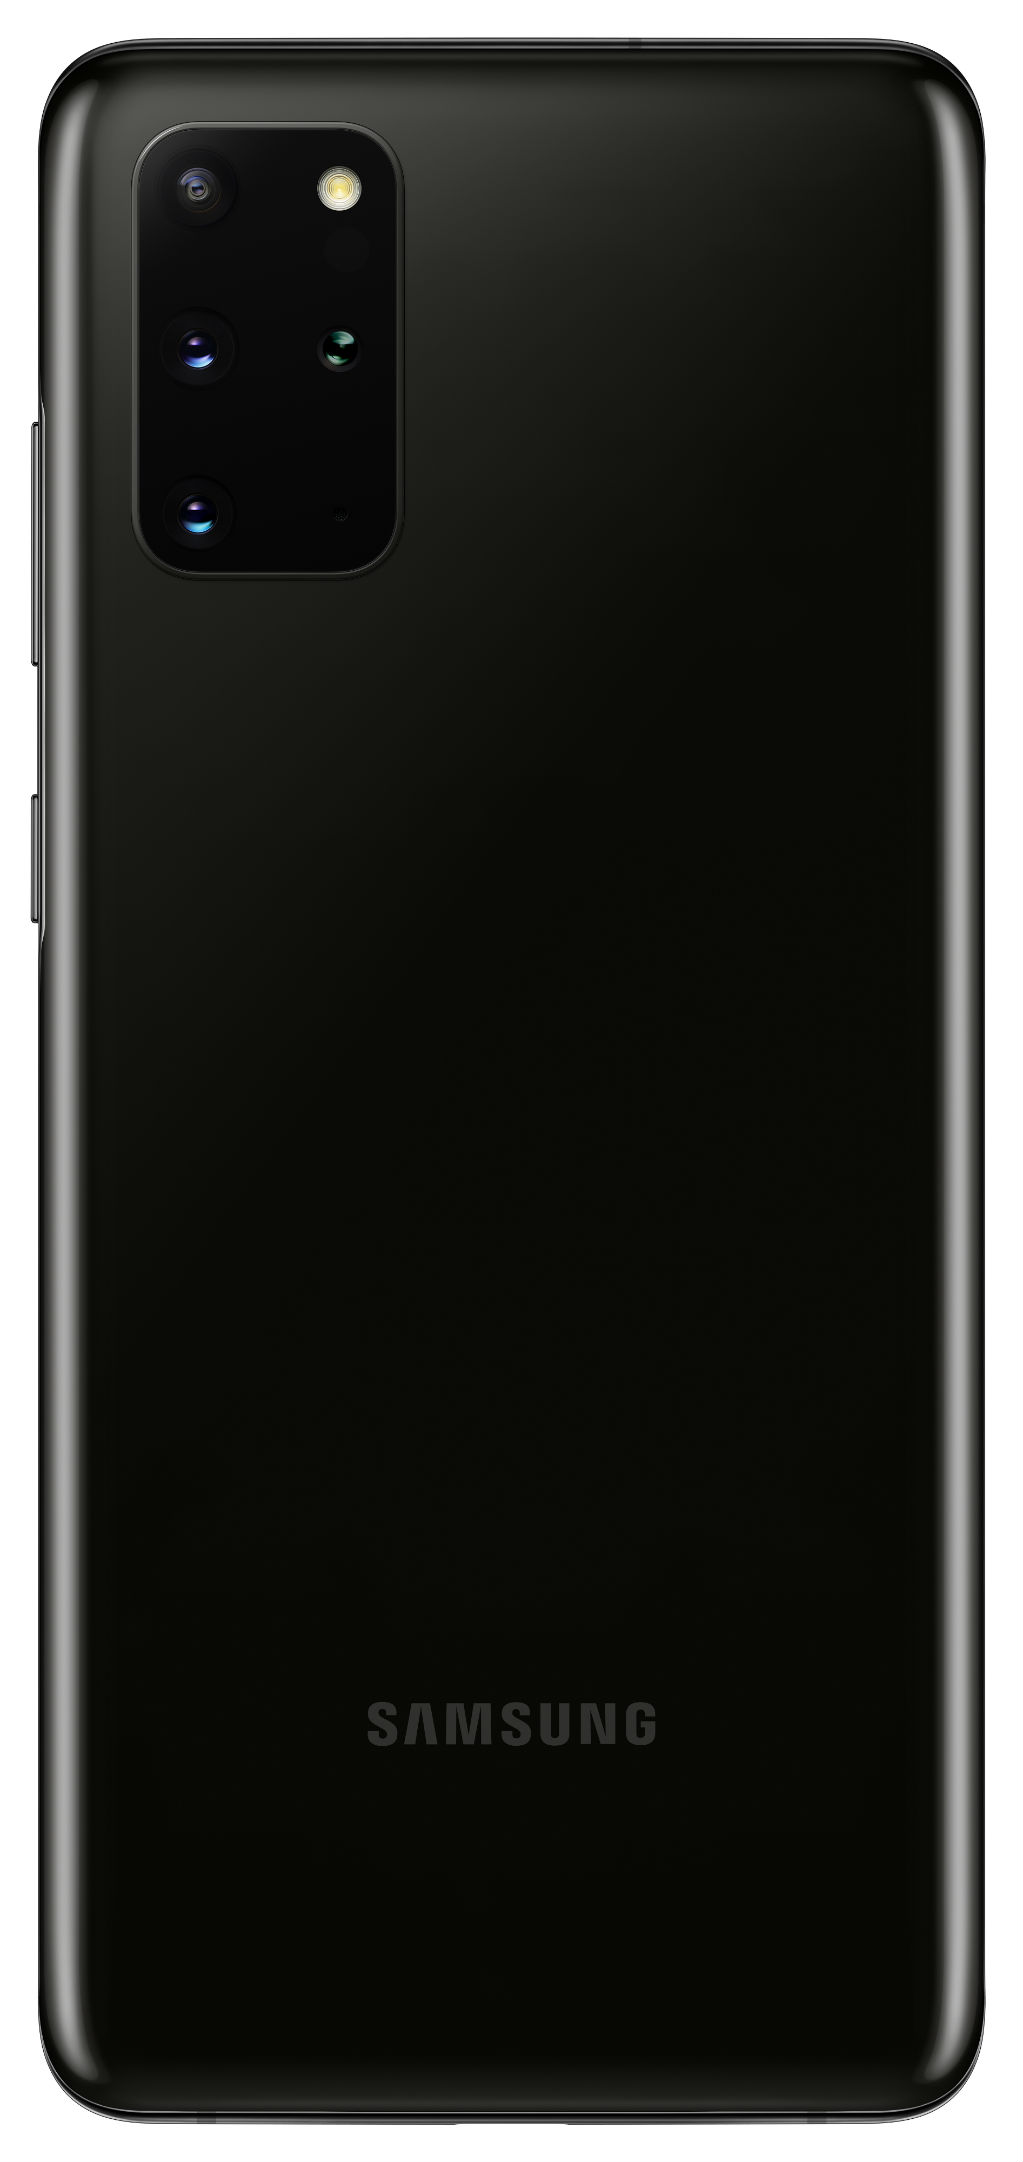 SAMSUNG Unlocked Galaxy S20 Plus, 512GB Black - Smartphone - image 2 of 8